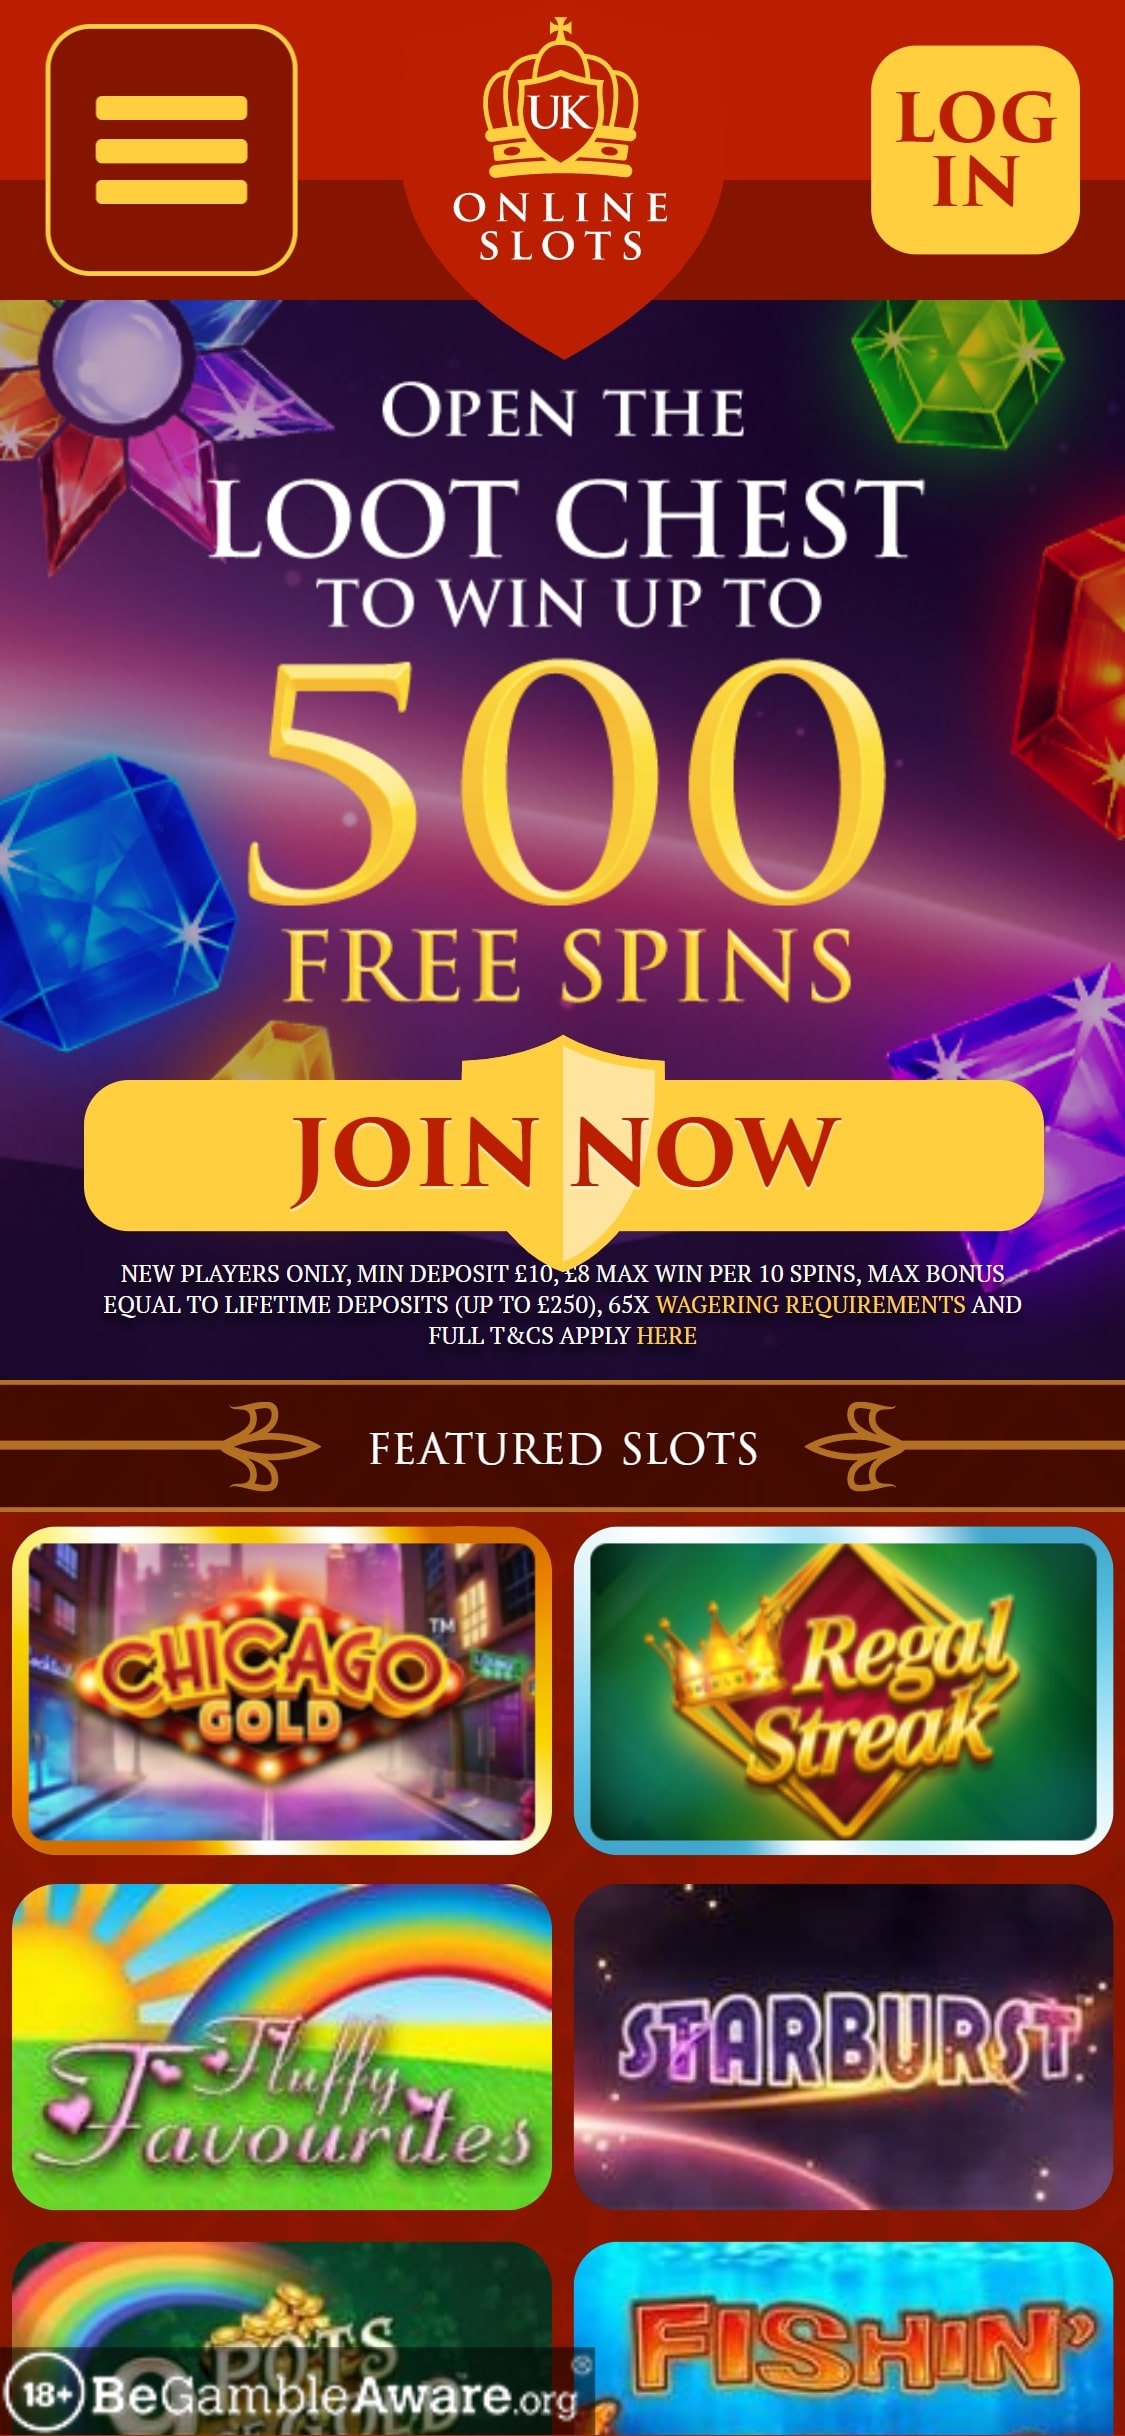 UK Online Slots Casino Mobile Review